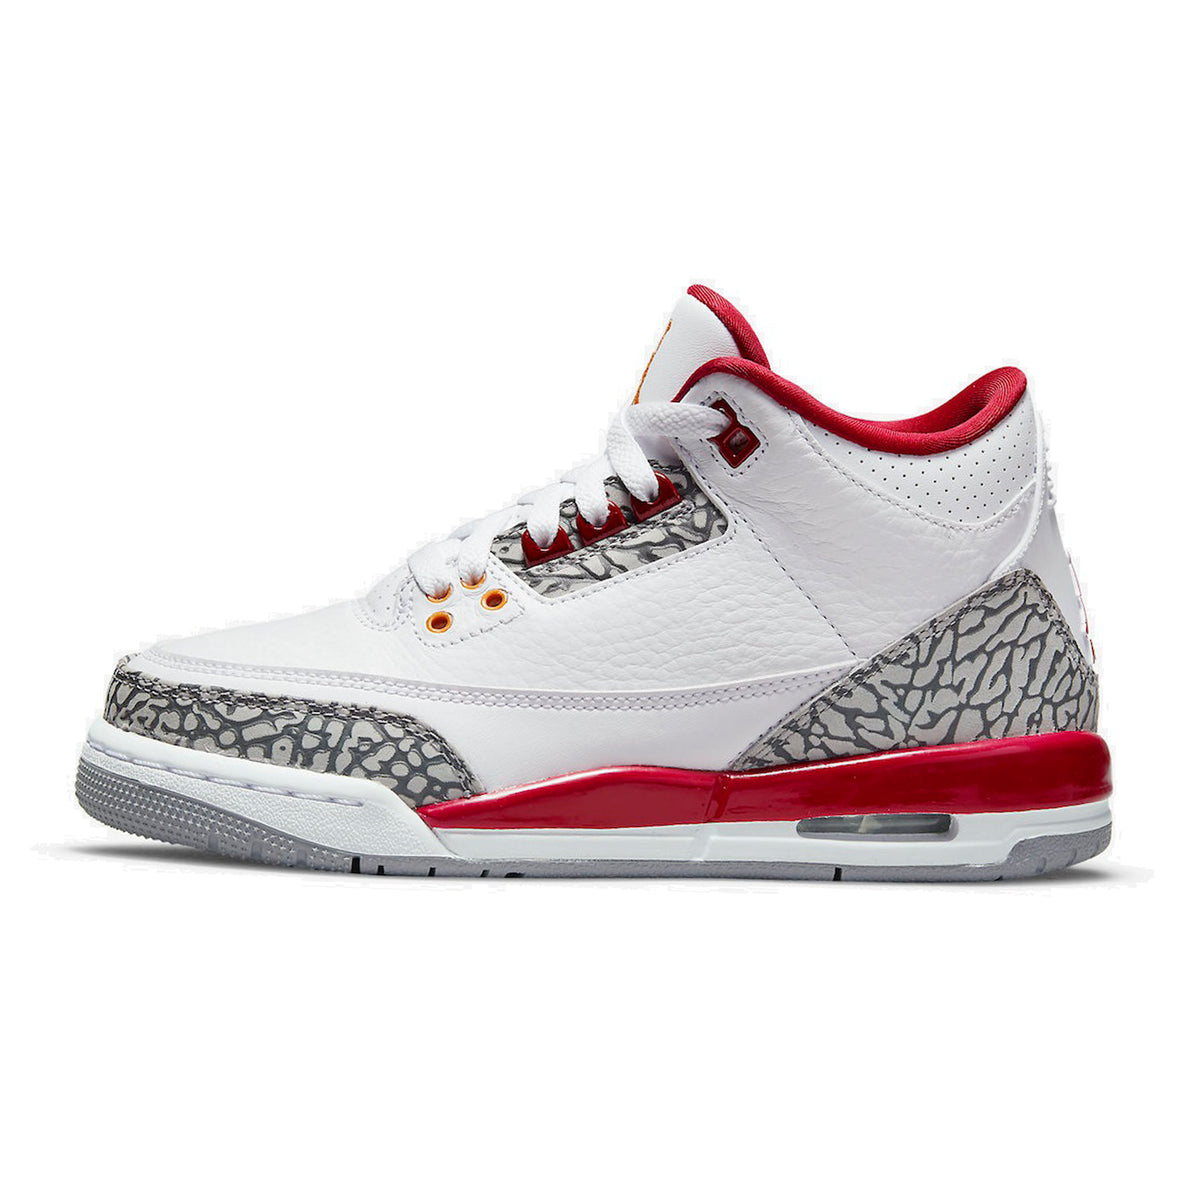 Air Jordan 3 - Stay Fresh